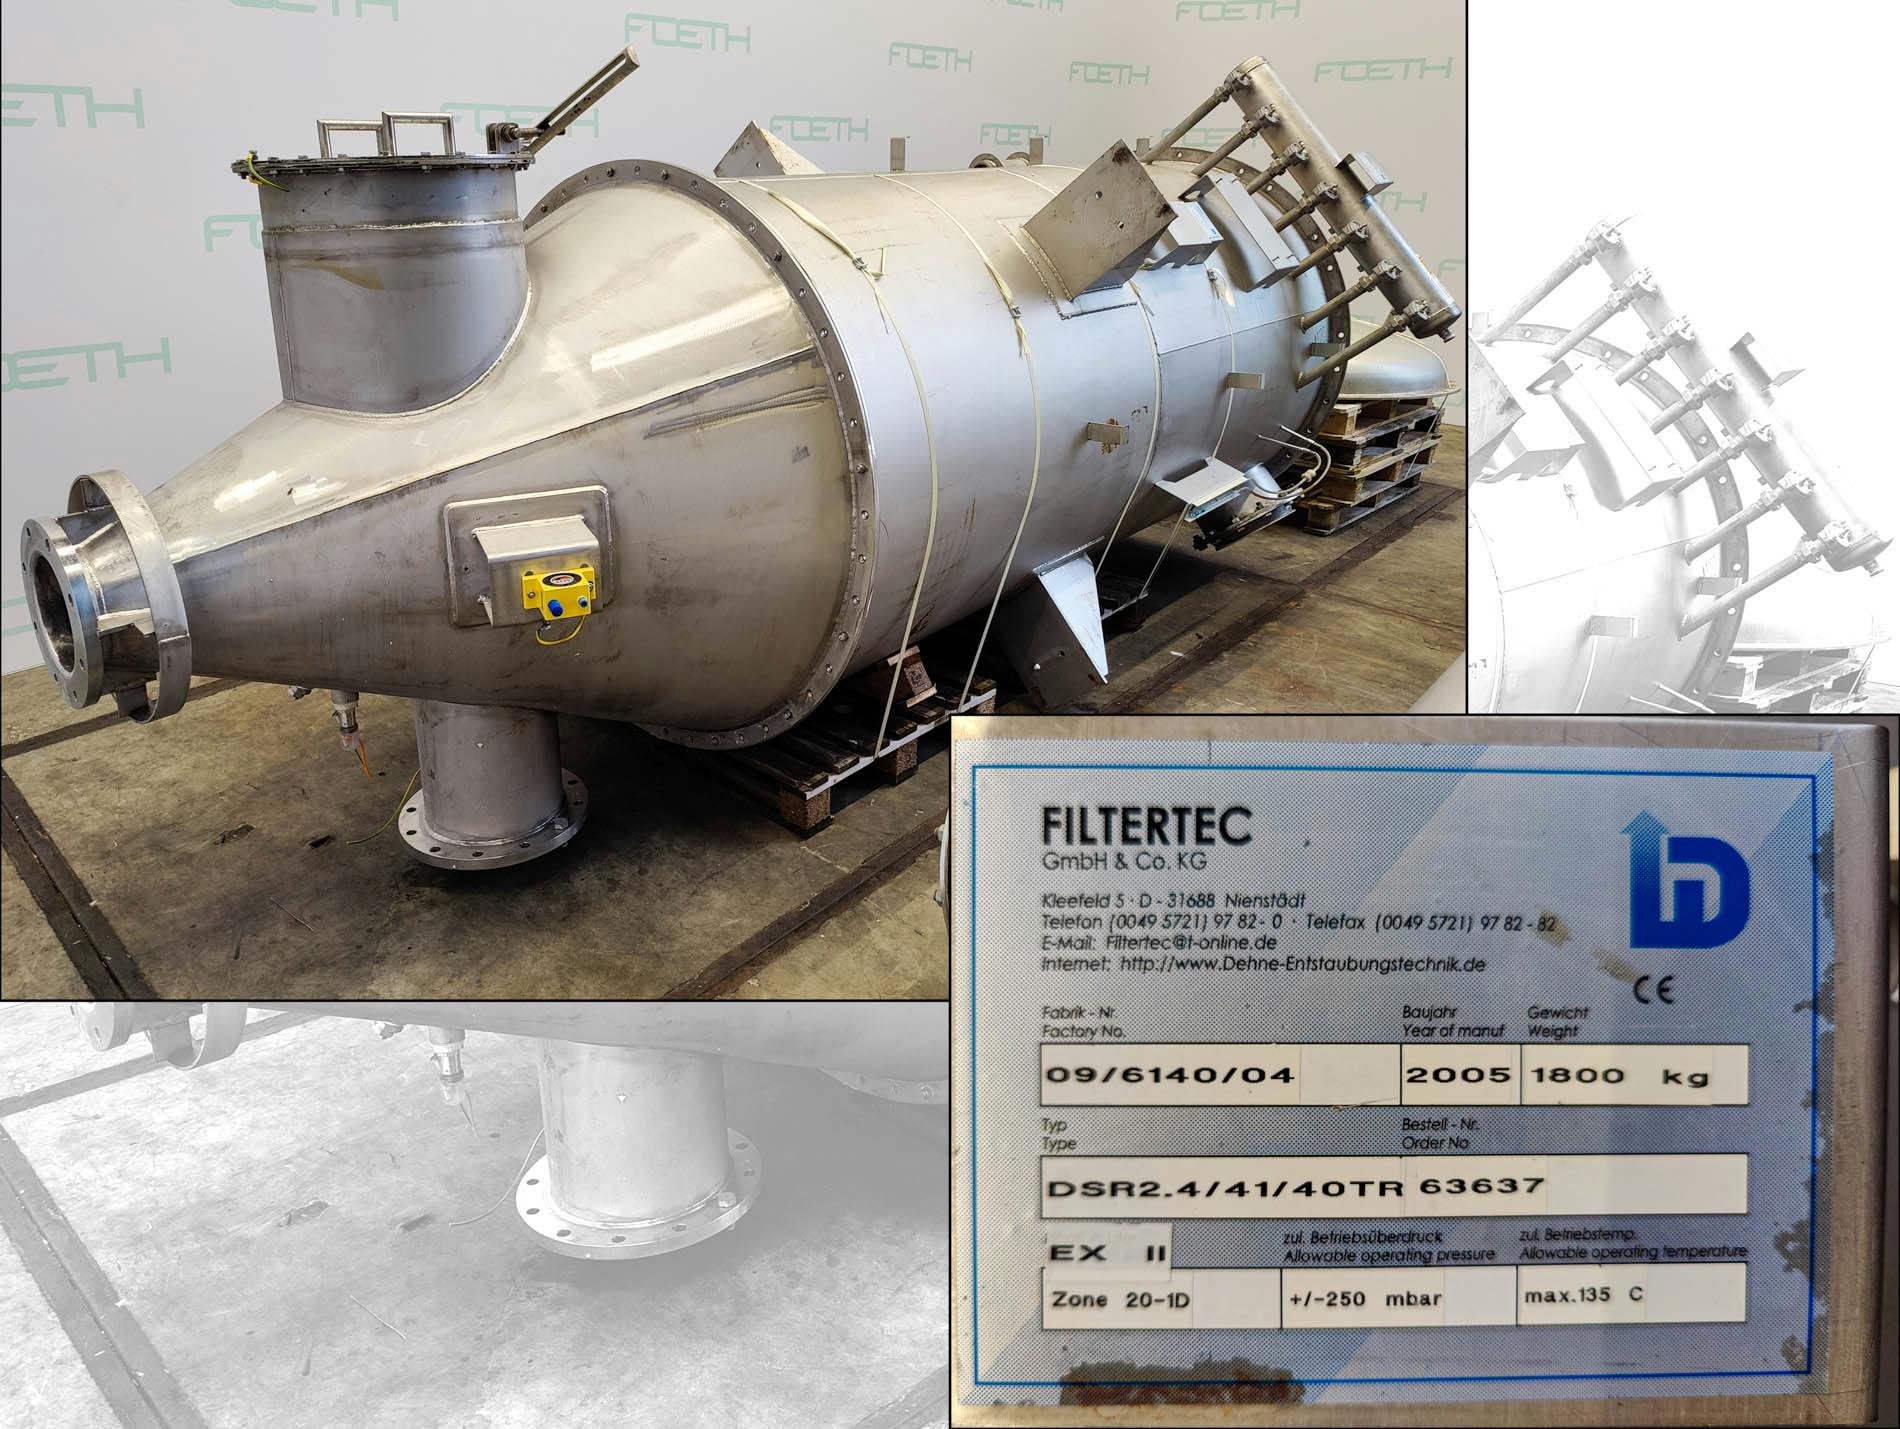 Hosokawa Micron DMR-2H FLASH-DROGER - Drying system - Continu droger - image 21